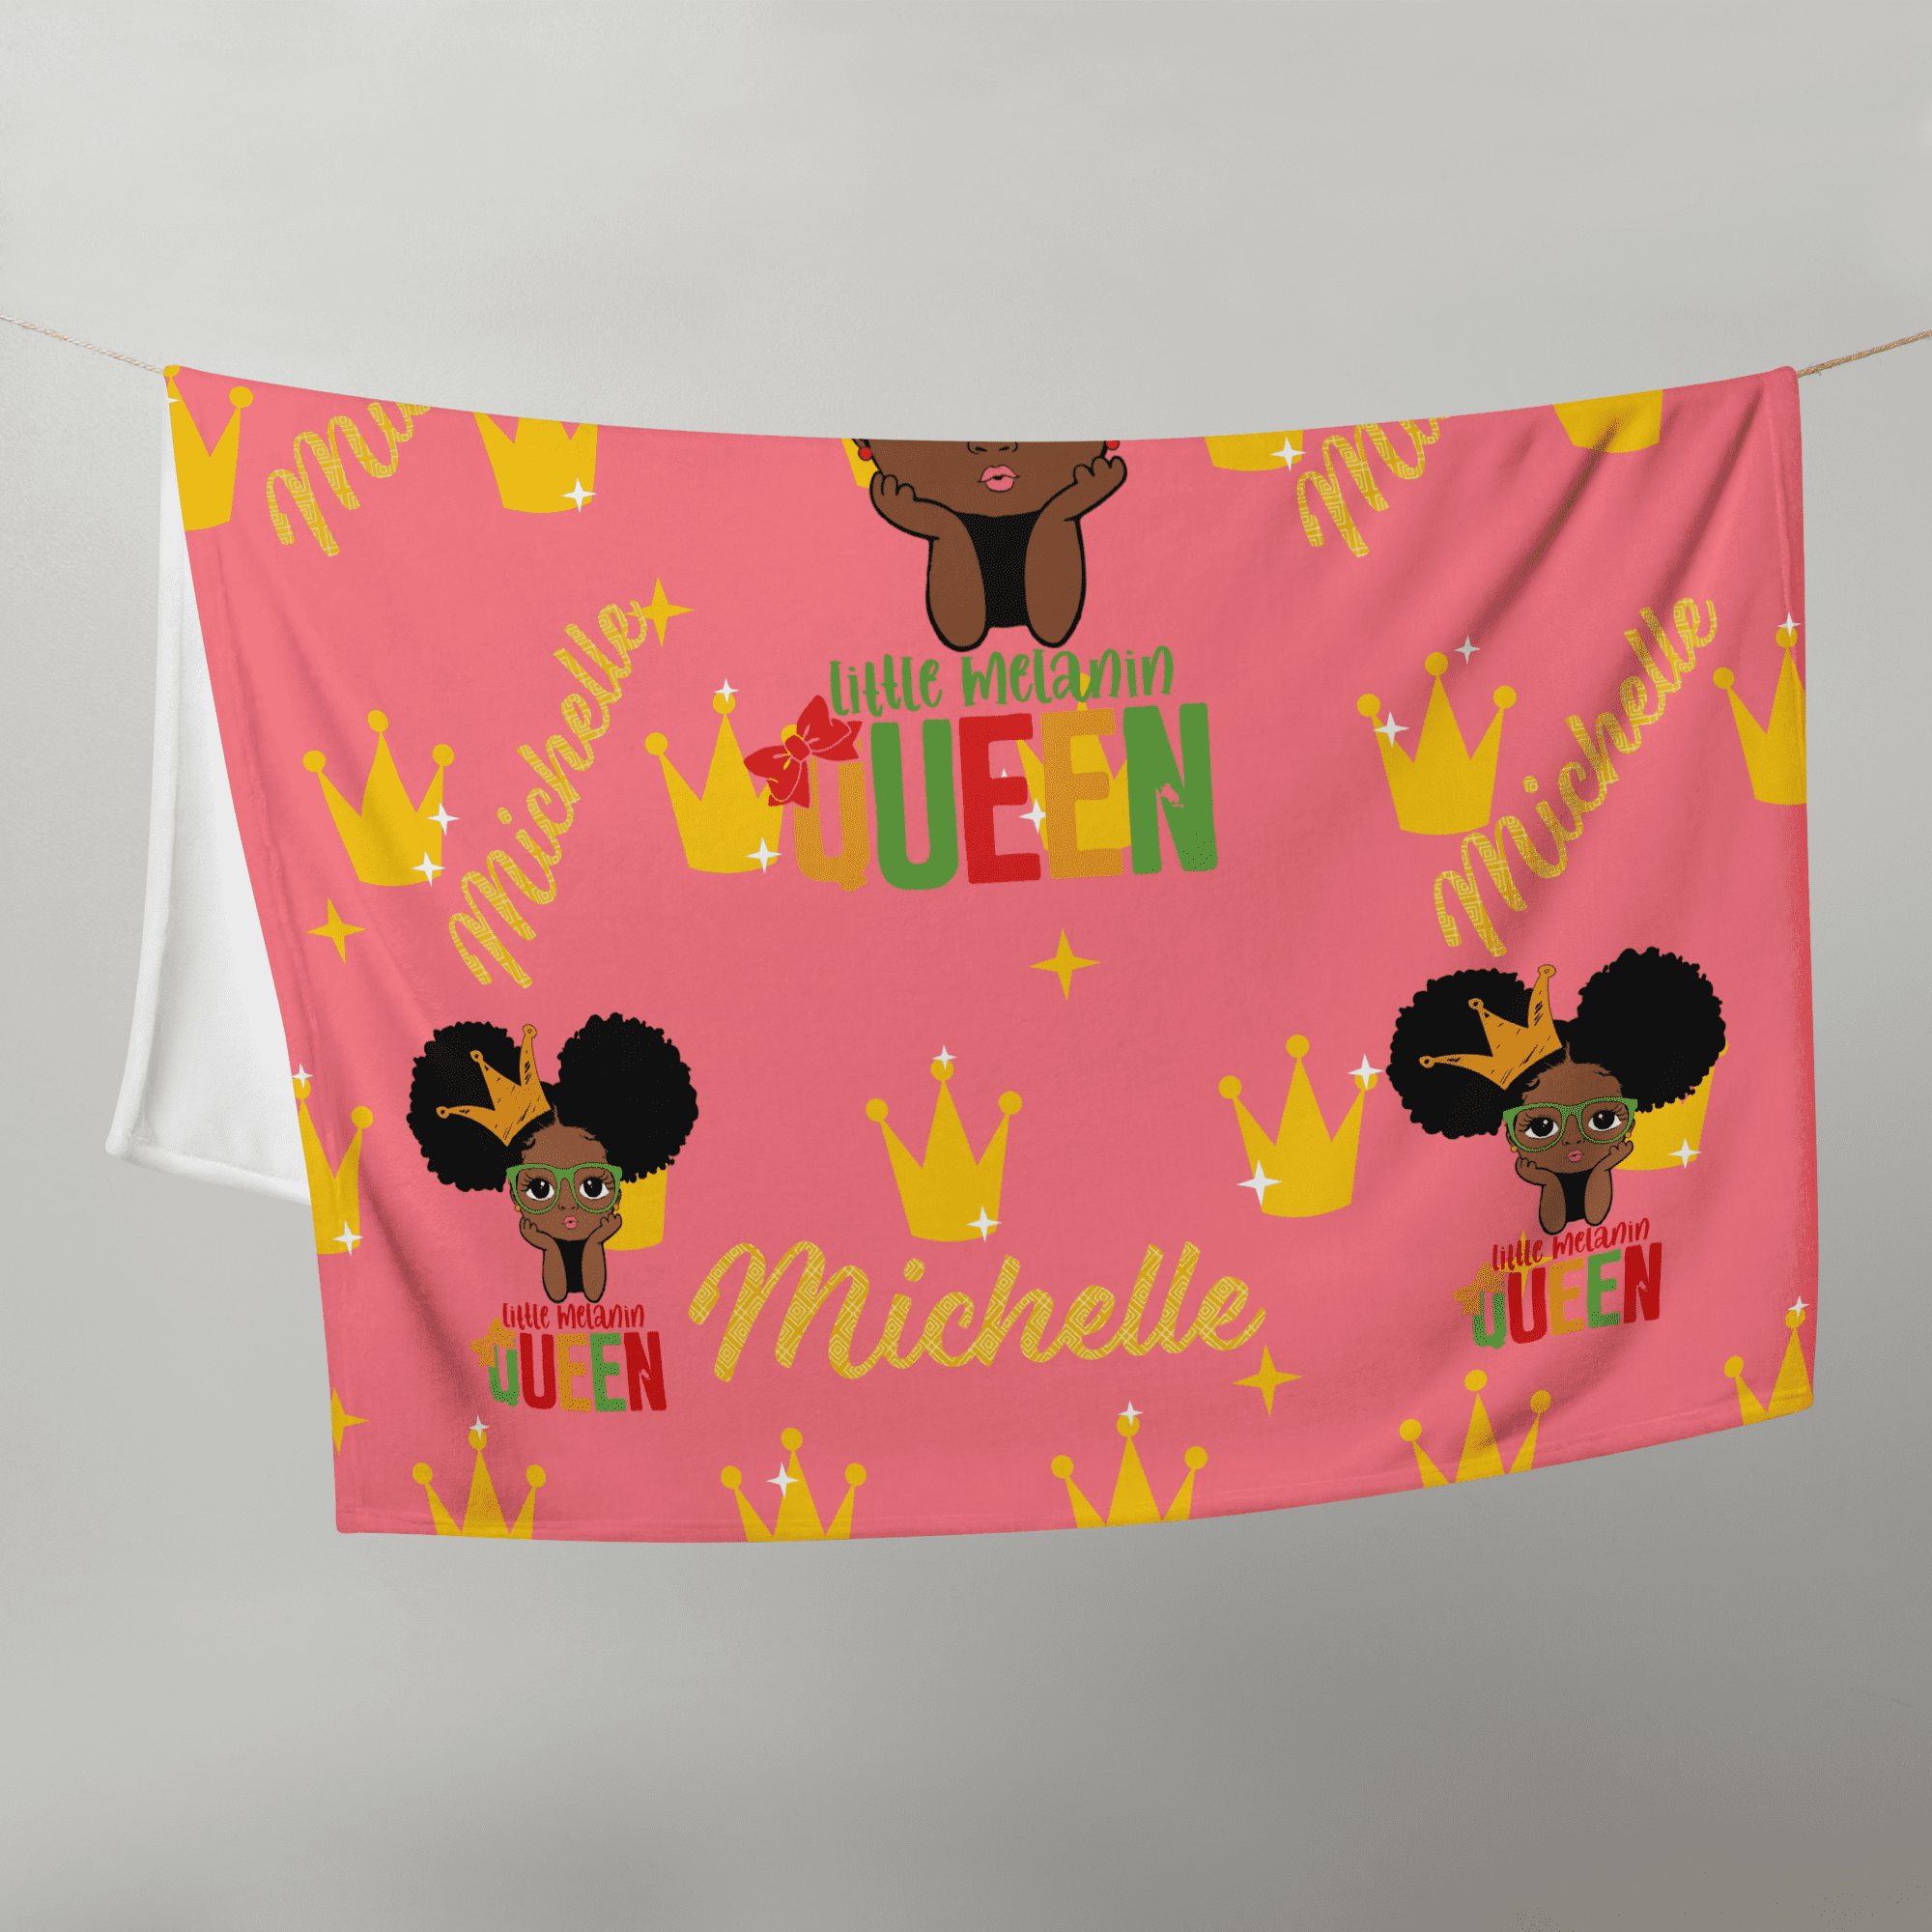 Personalised Little Melanin Queen Blanket